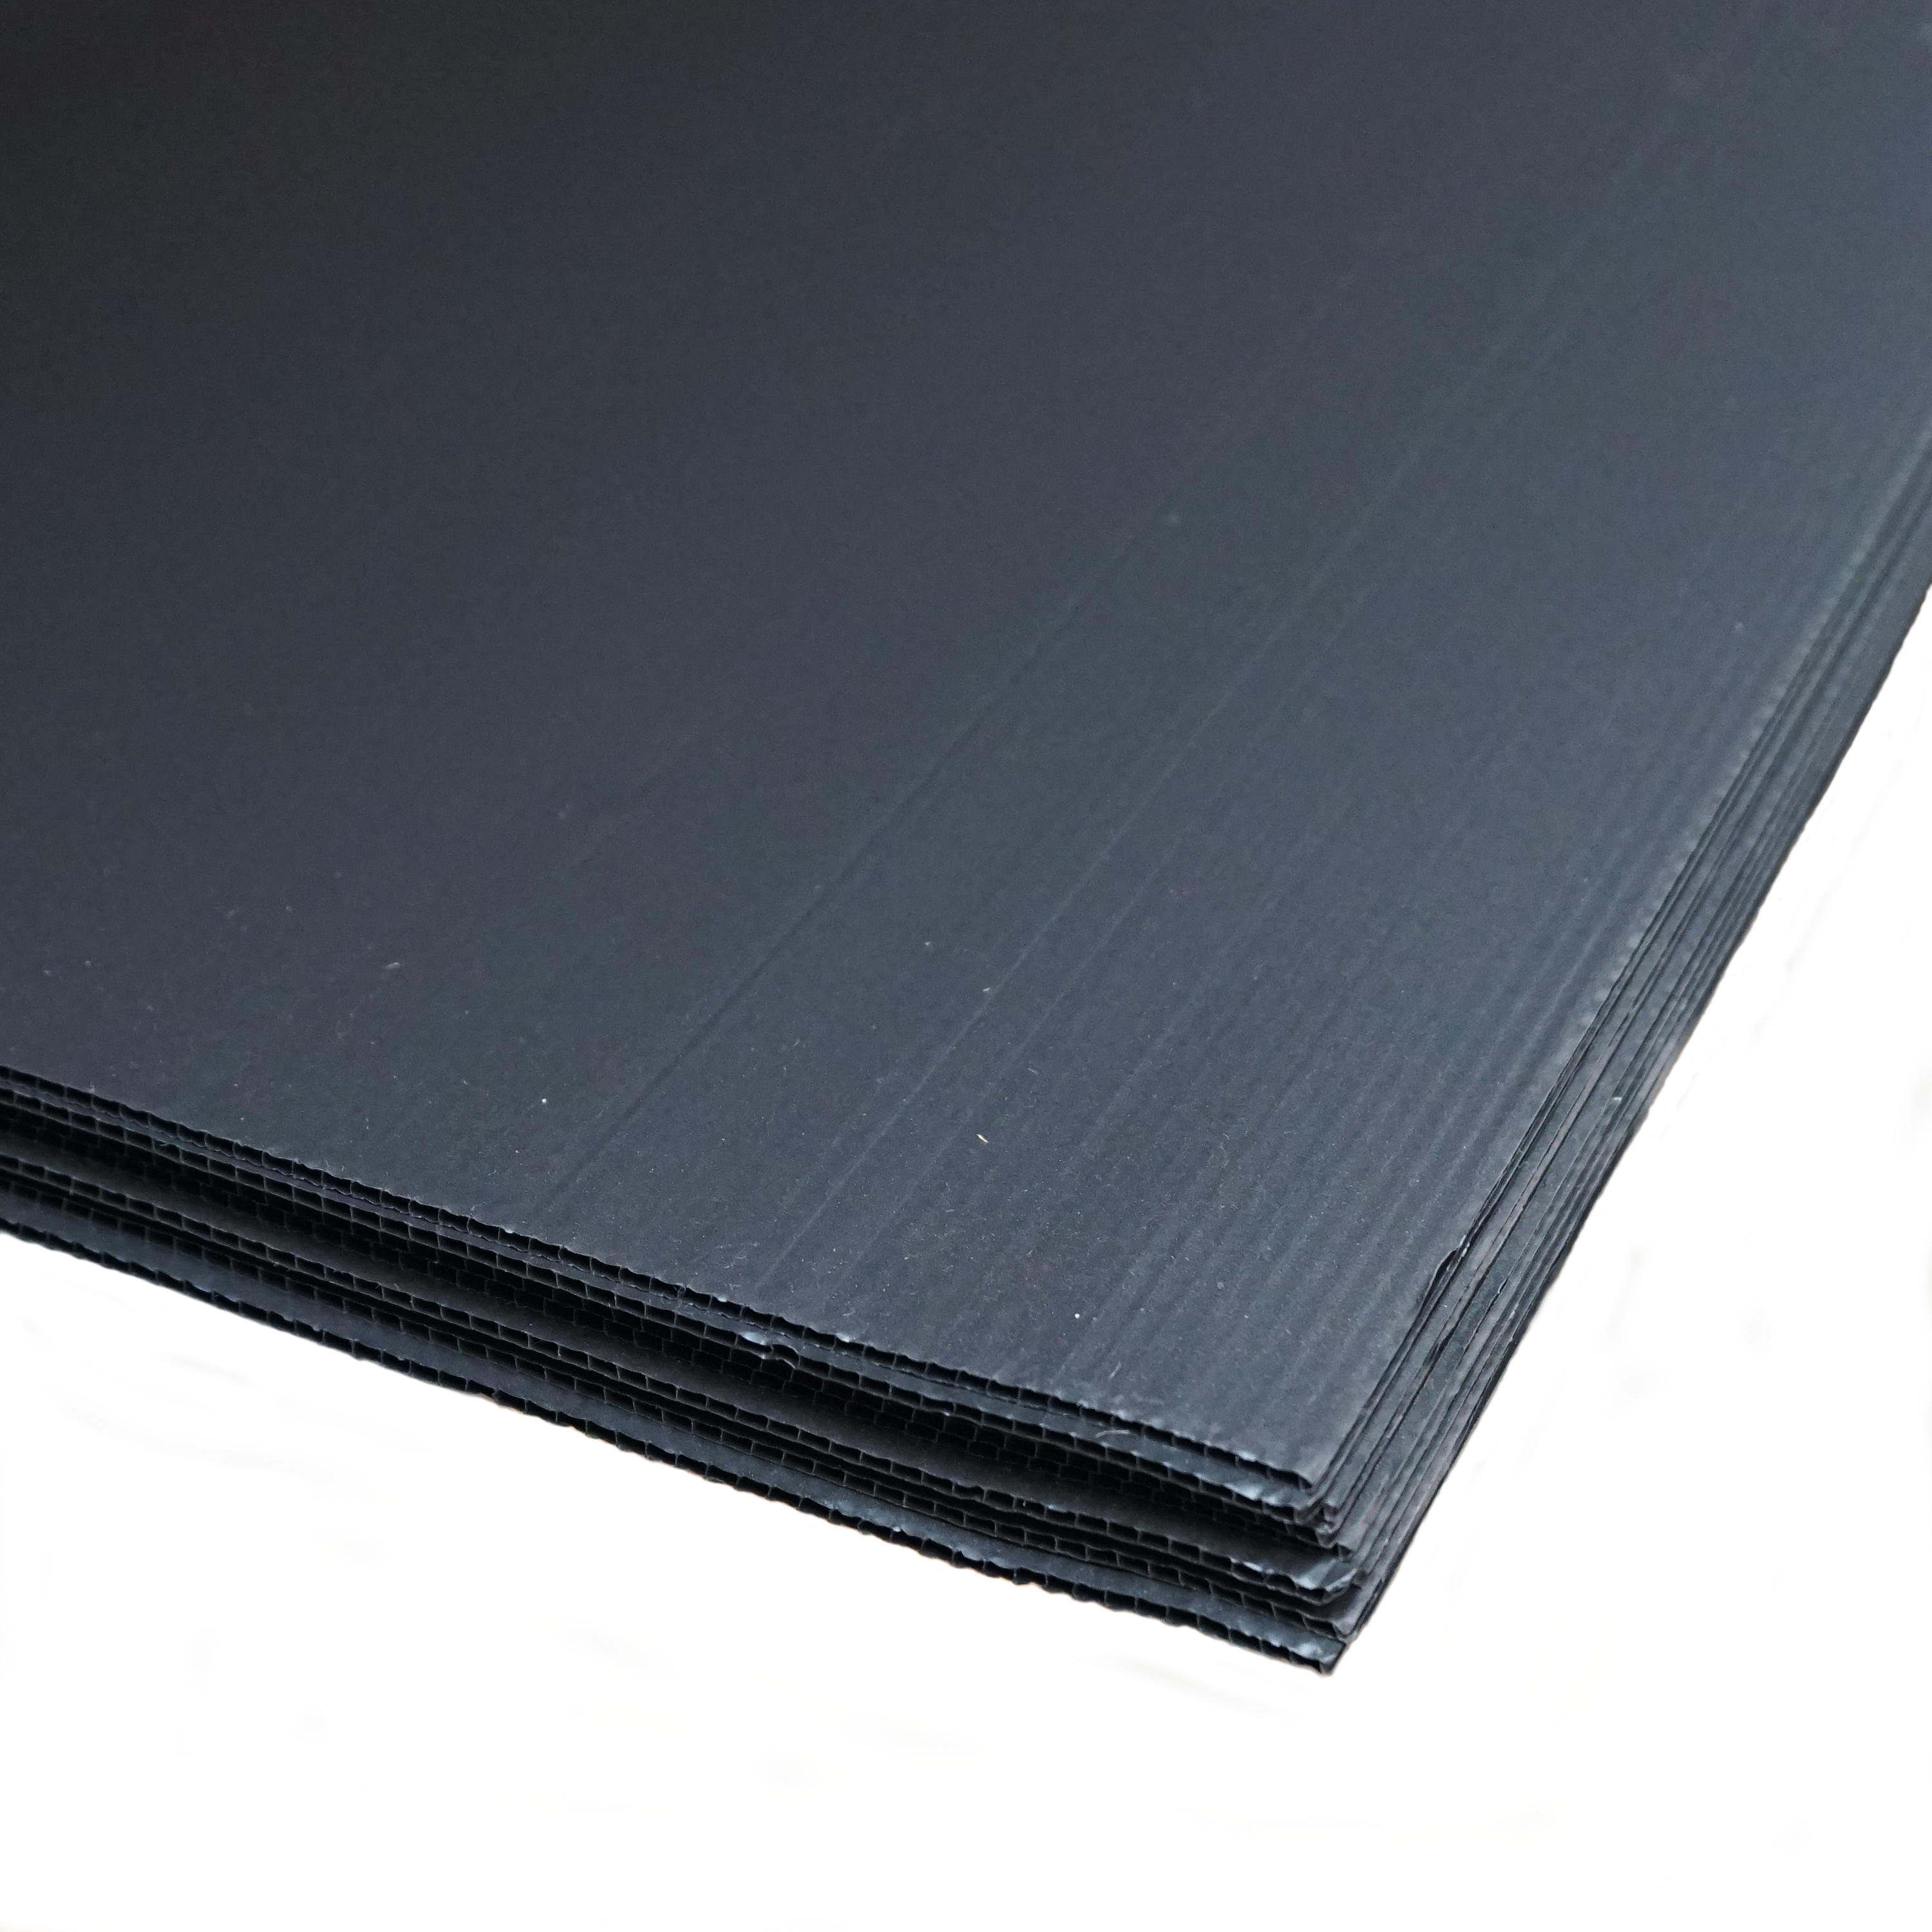 2.4m x 1.2m x 2mm Black Protection Board